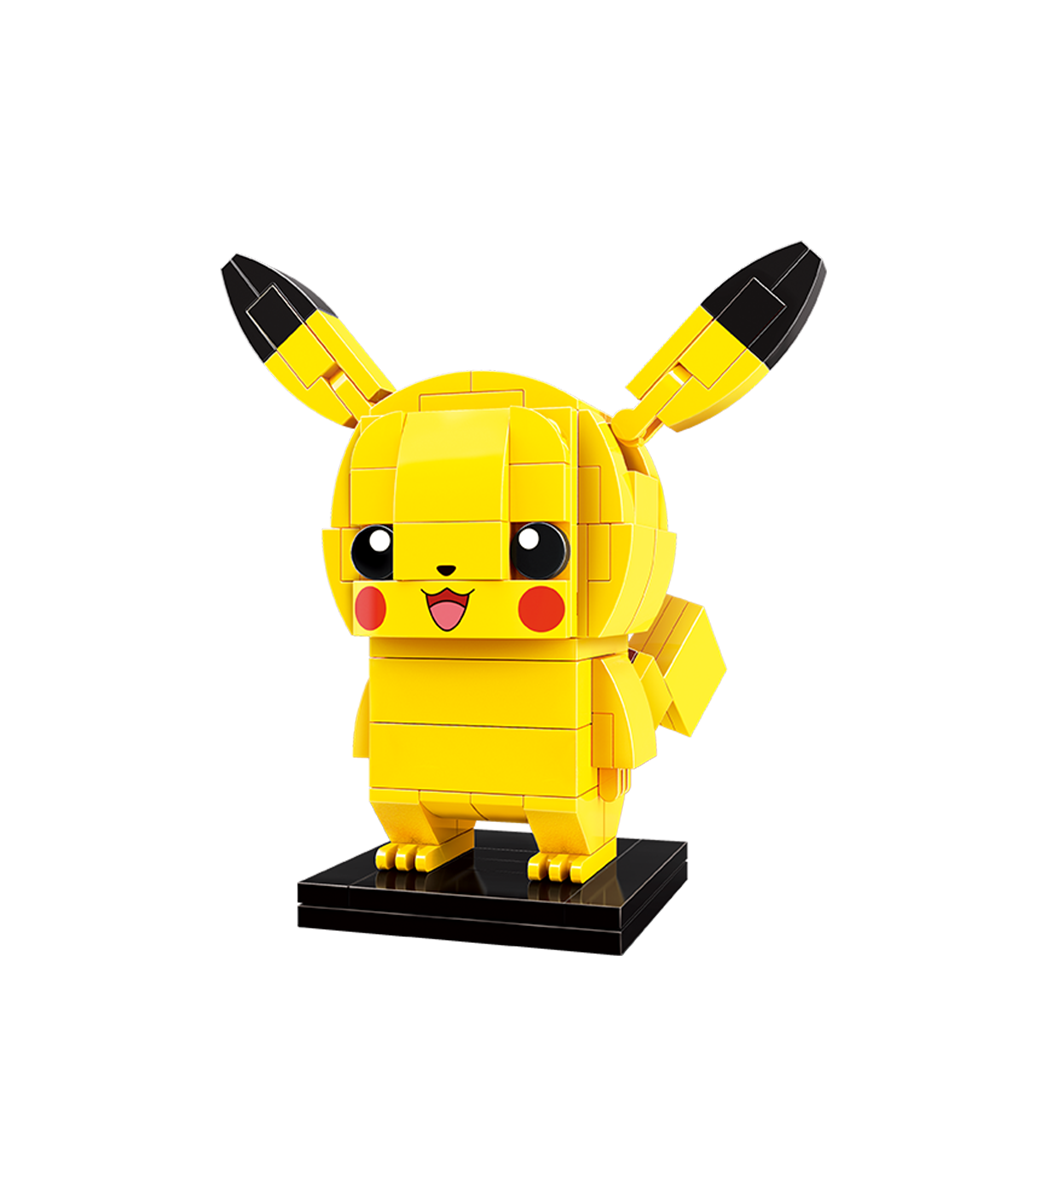 Keeppley Pokemon A0101 Pikachu Qman Building Blocks Toy Set 